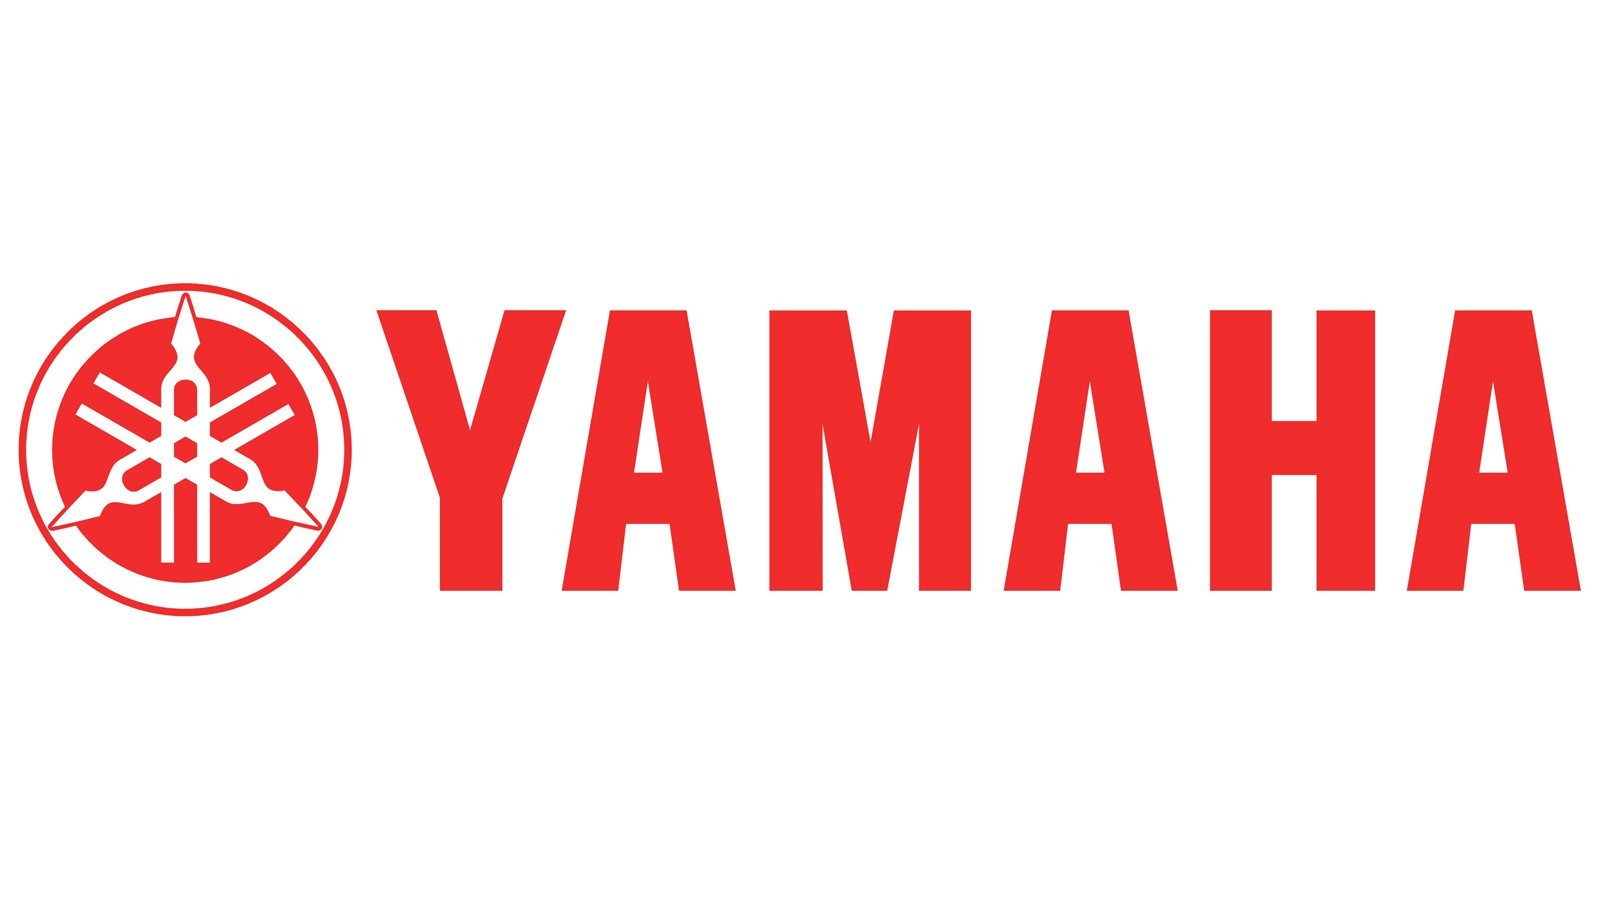 Yamaha Sports Ride Concept